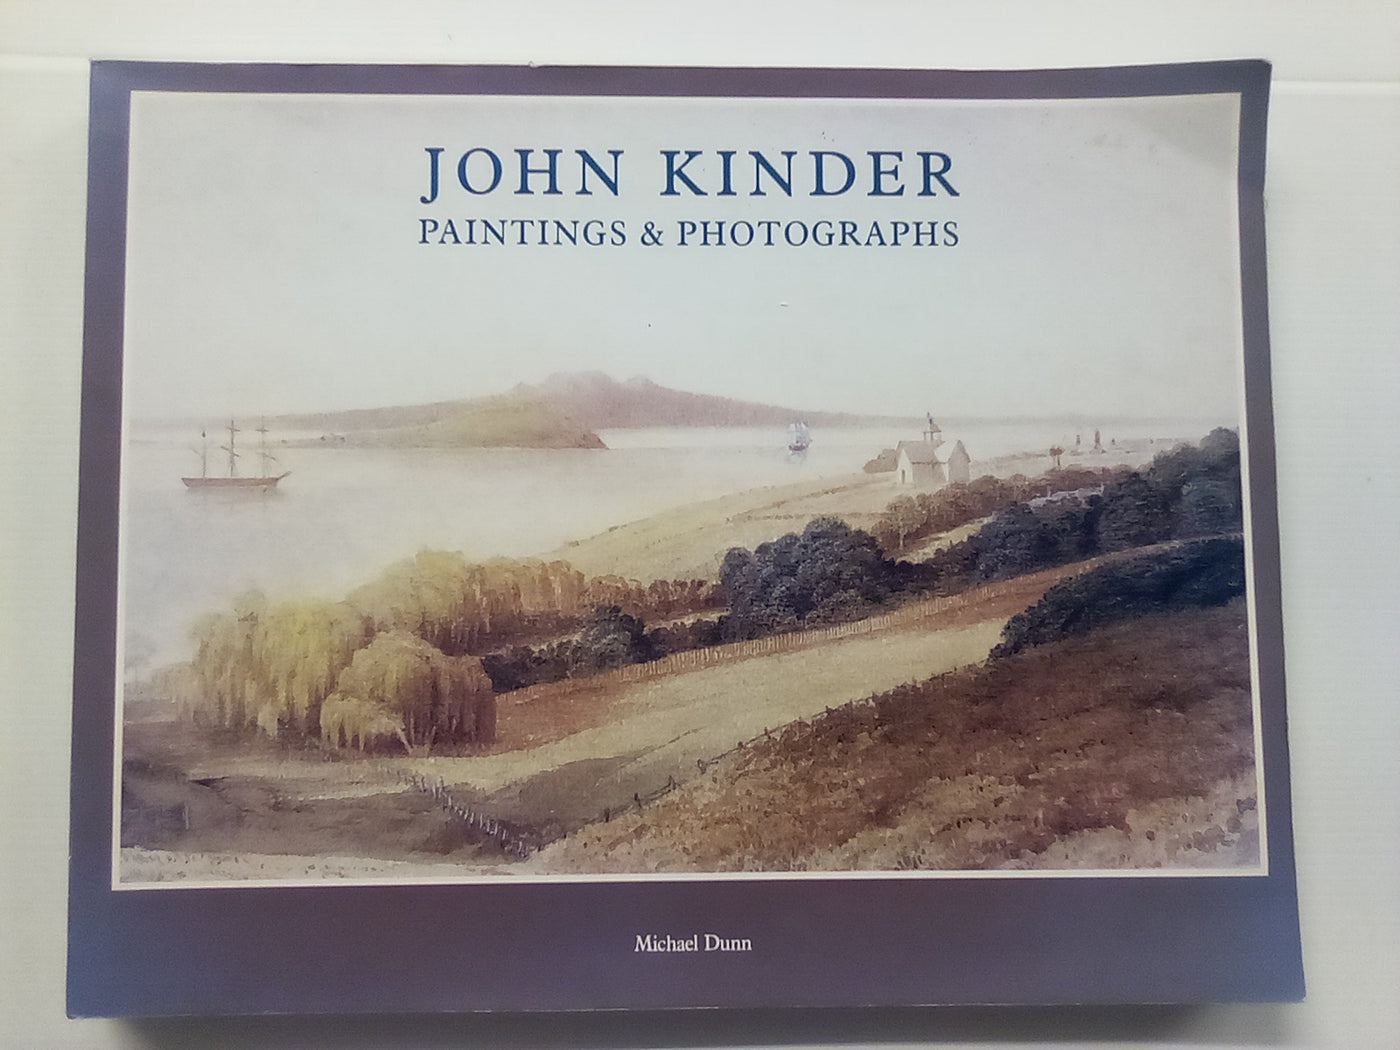 John Kinder - Paintings & Photographs by Michael Dunn